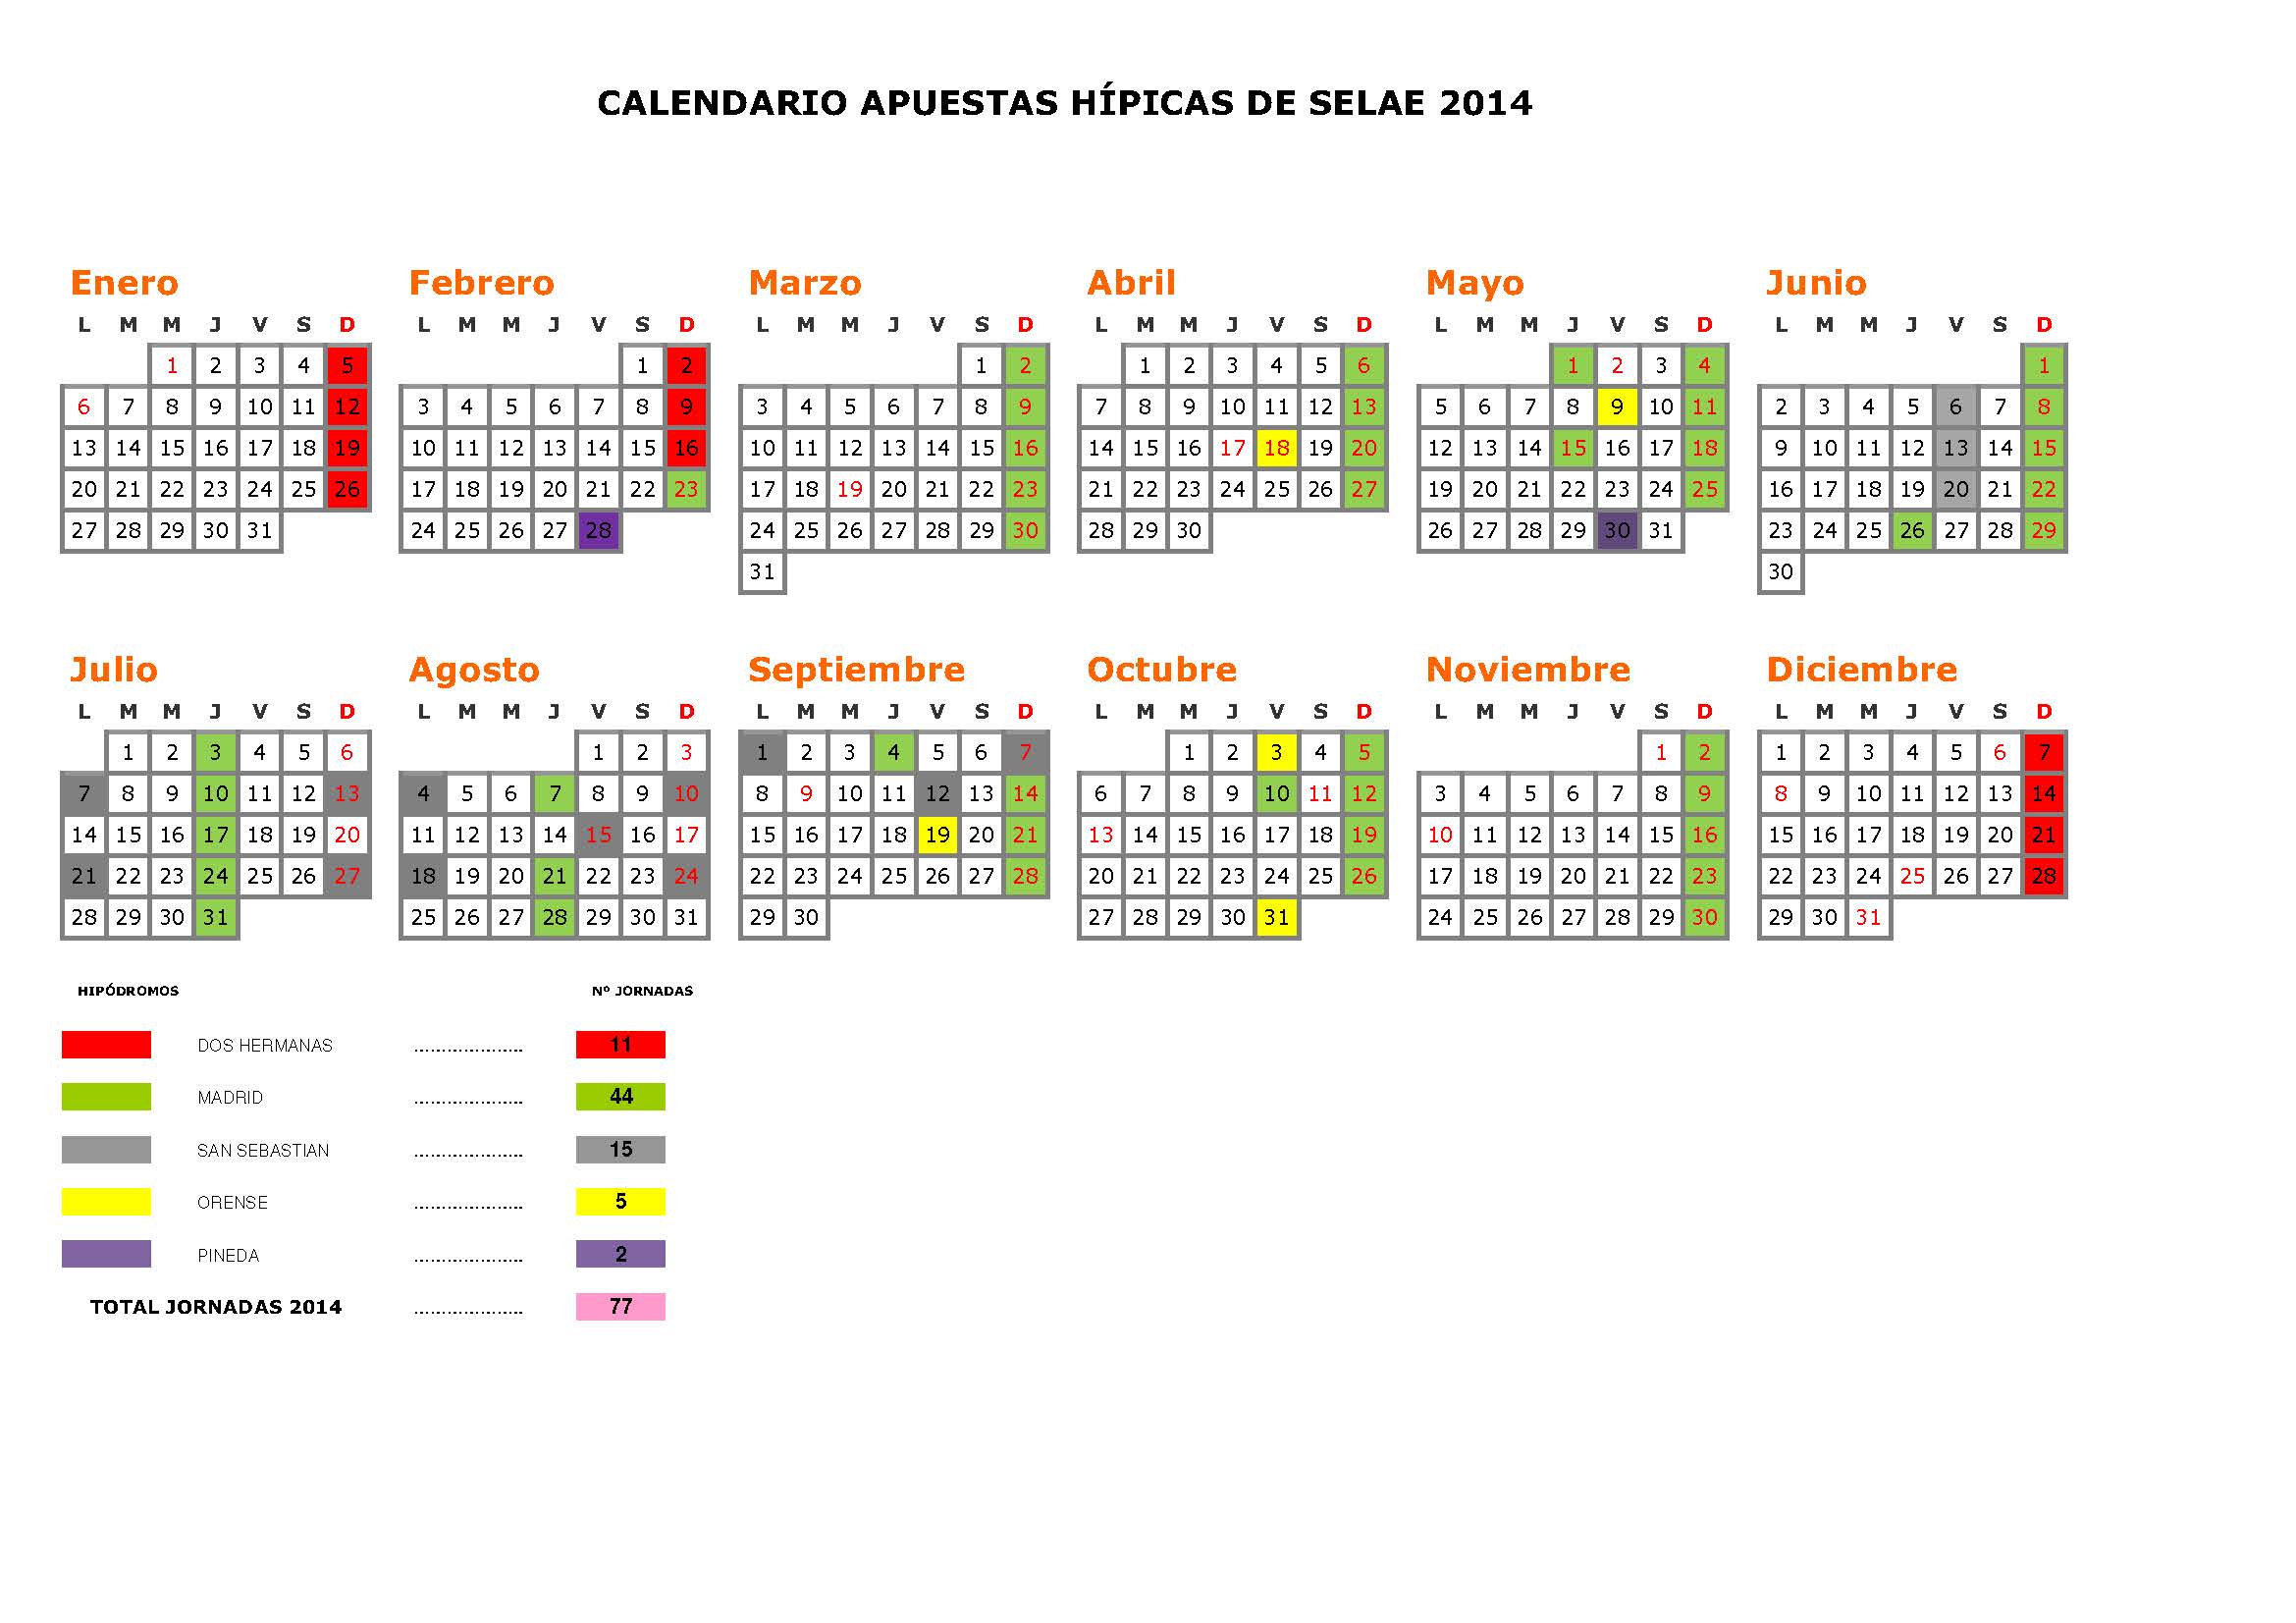 Calendario jornadas LAE 2014